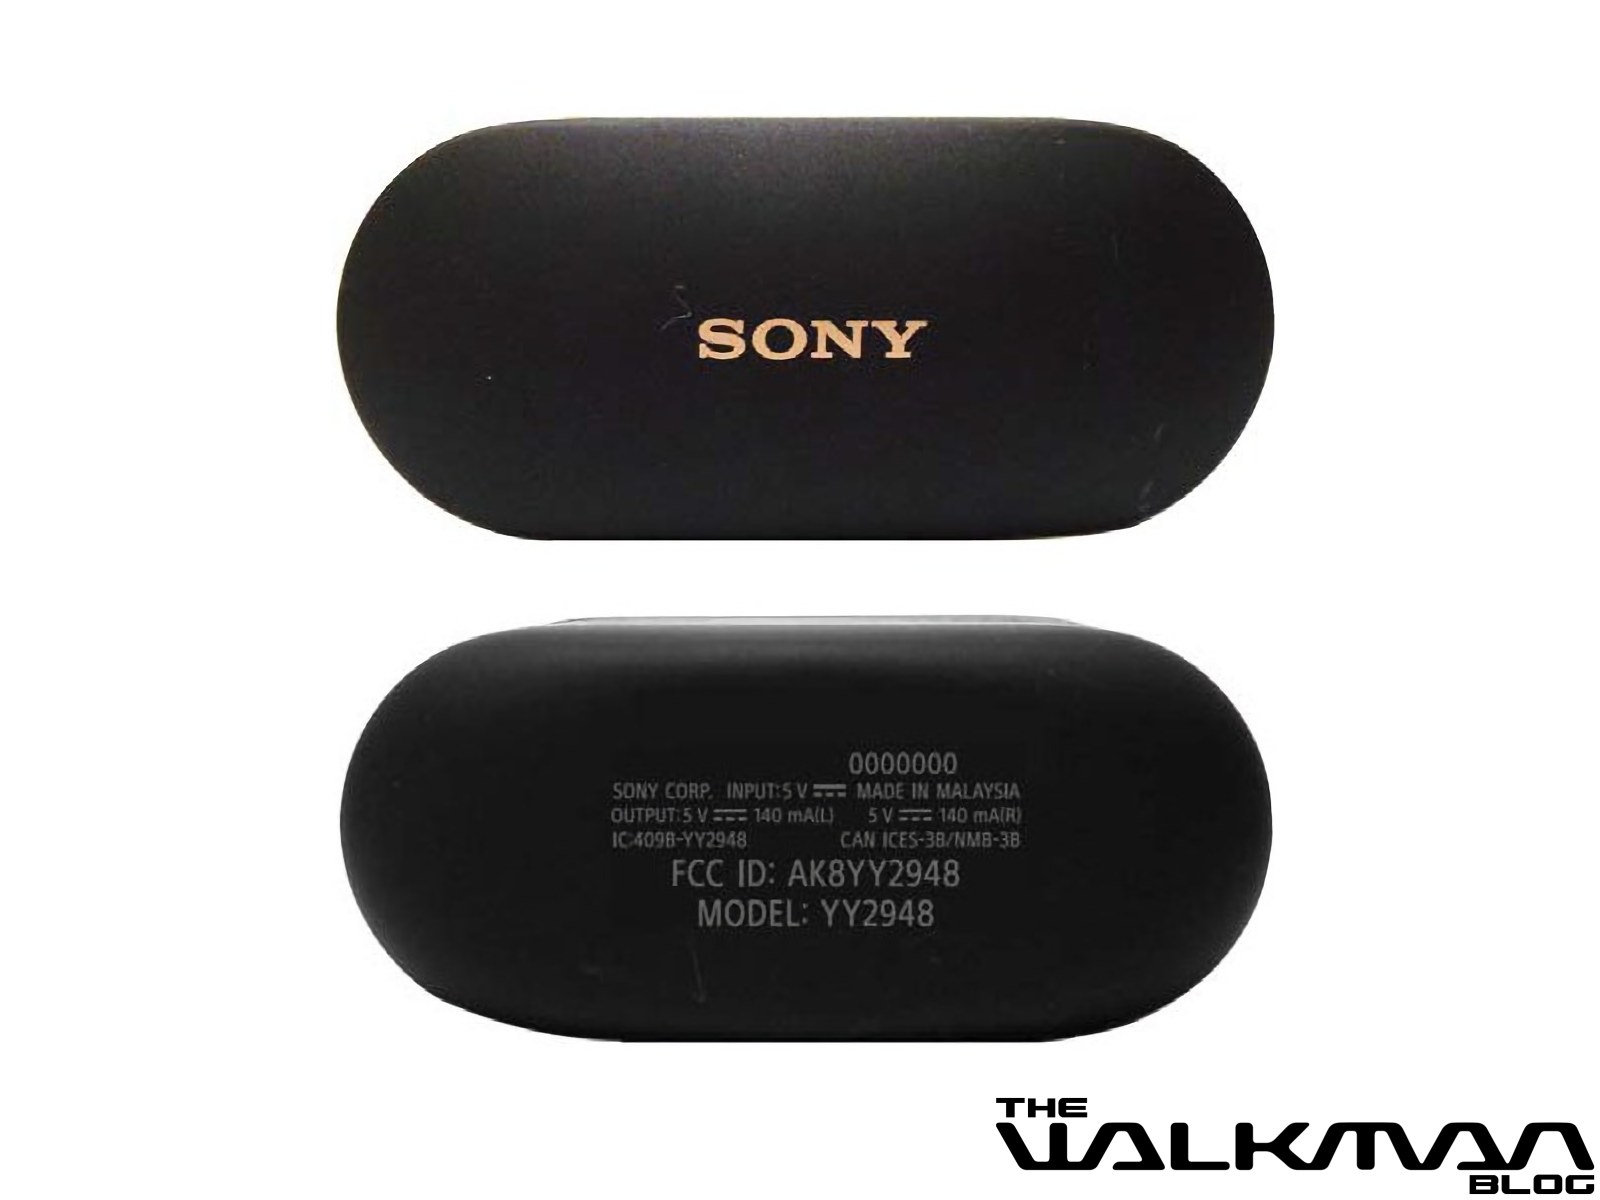 Sony WF-1000XM4 full design leaked (update 3) - The Walkman Blog